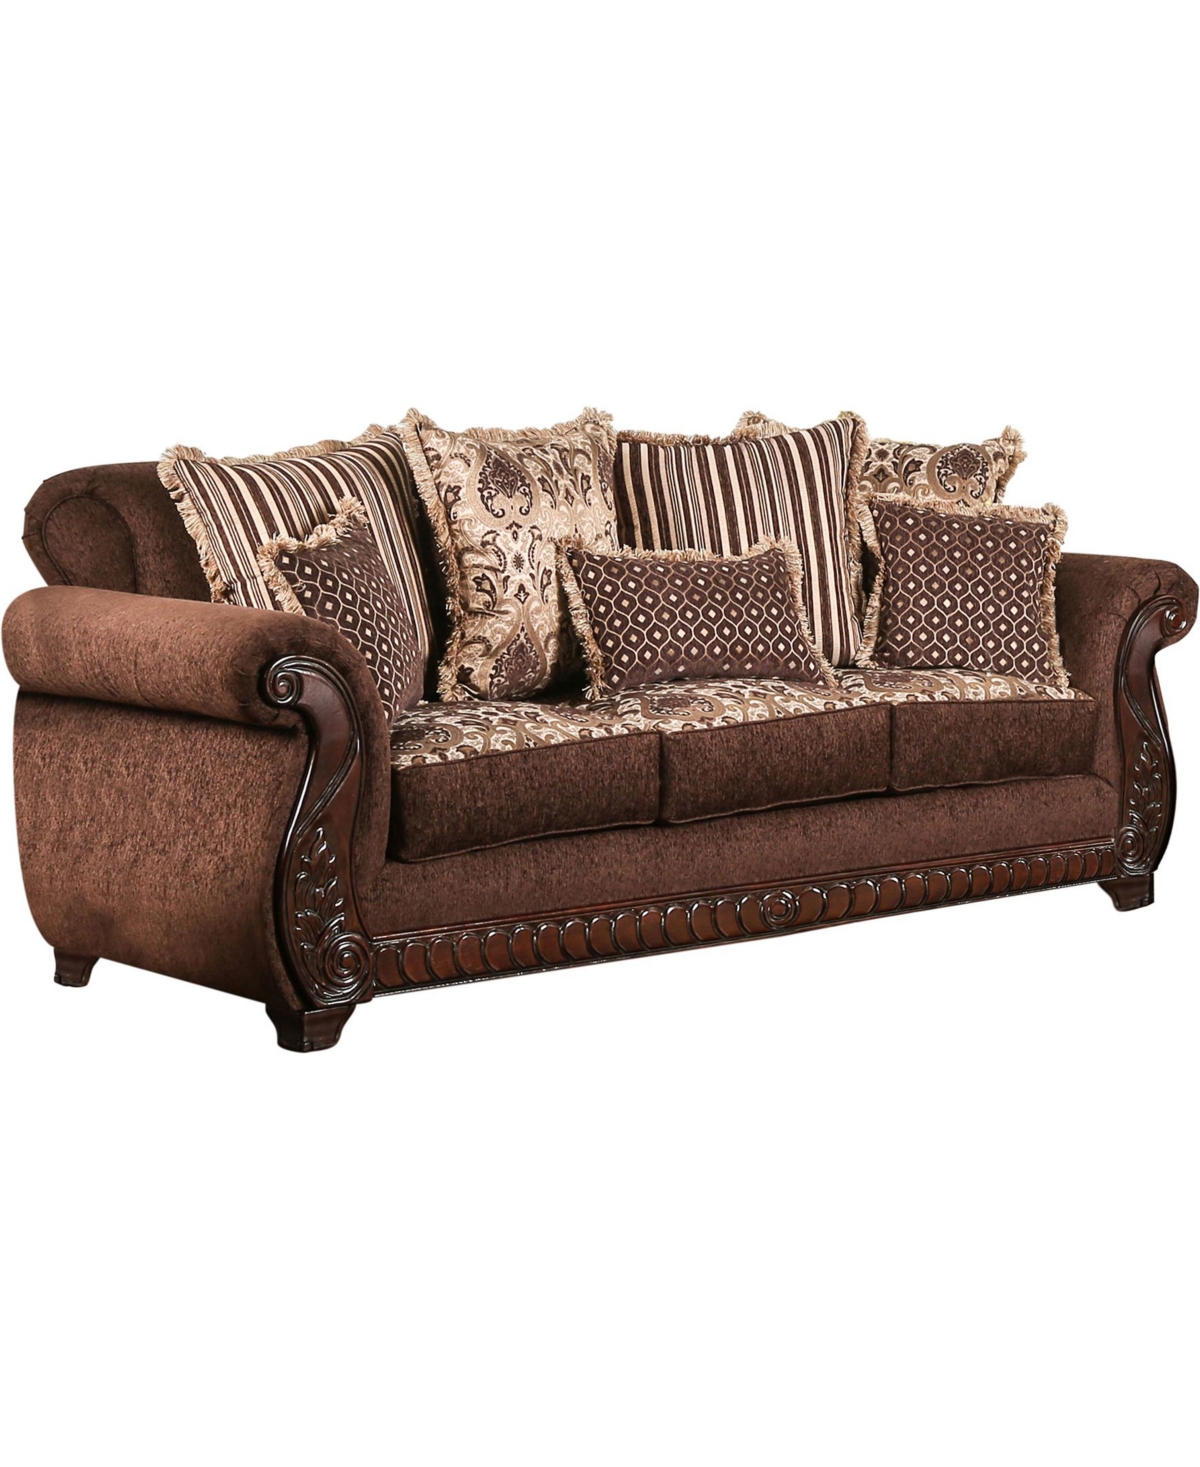 of America Wunderlich Upholstered Sofa